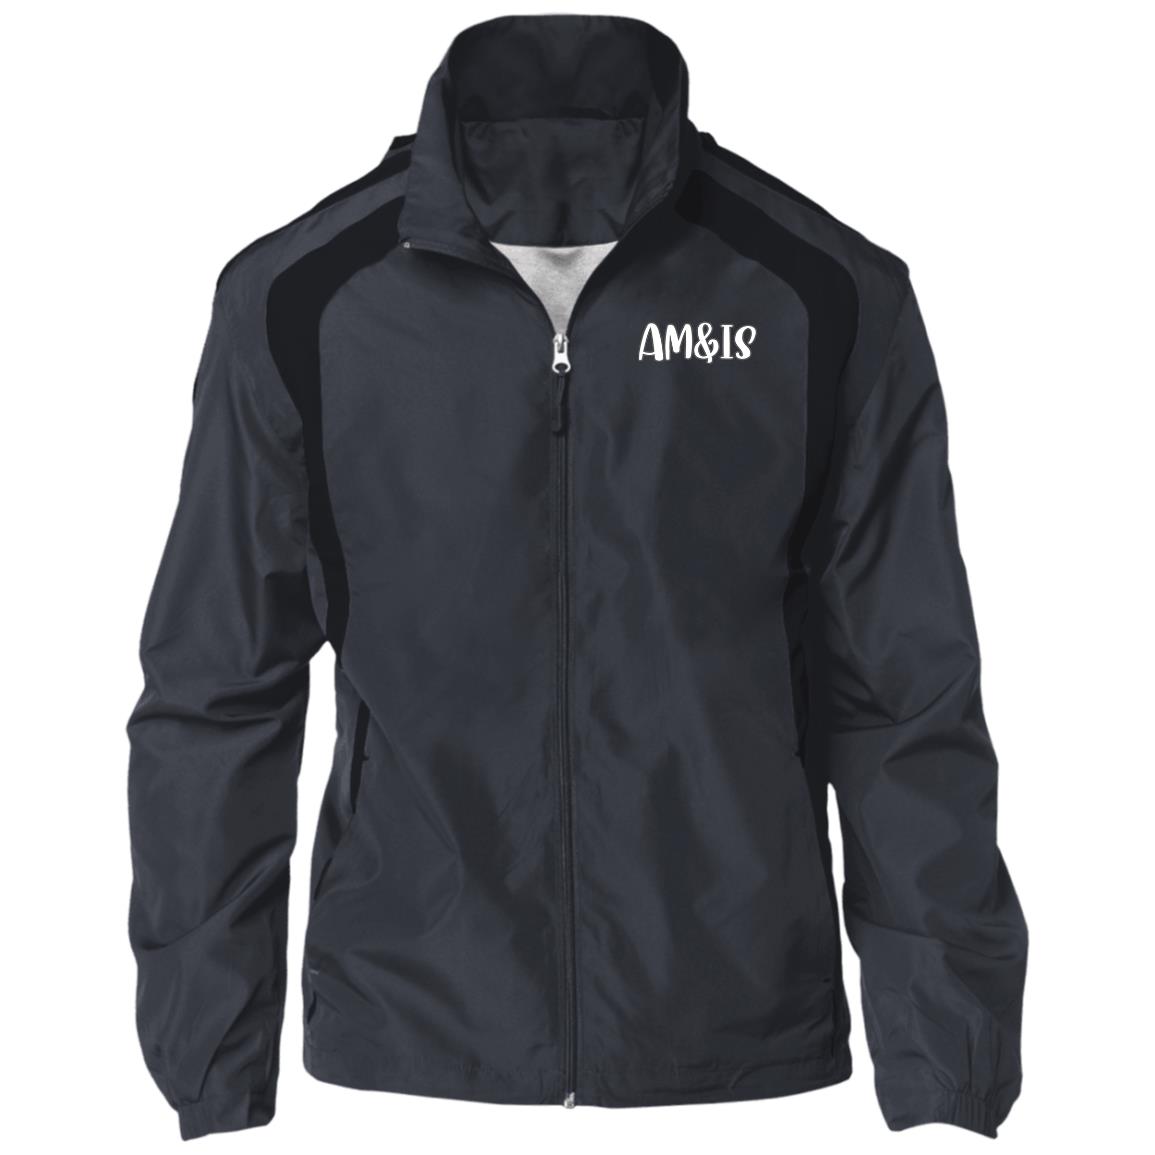 GRAPHITE BLACK - AM&IS Activewear Jersey-Lined Raglan Jacket - mens jacket at TFC&H Co.